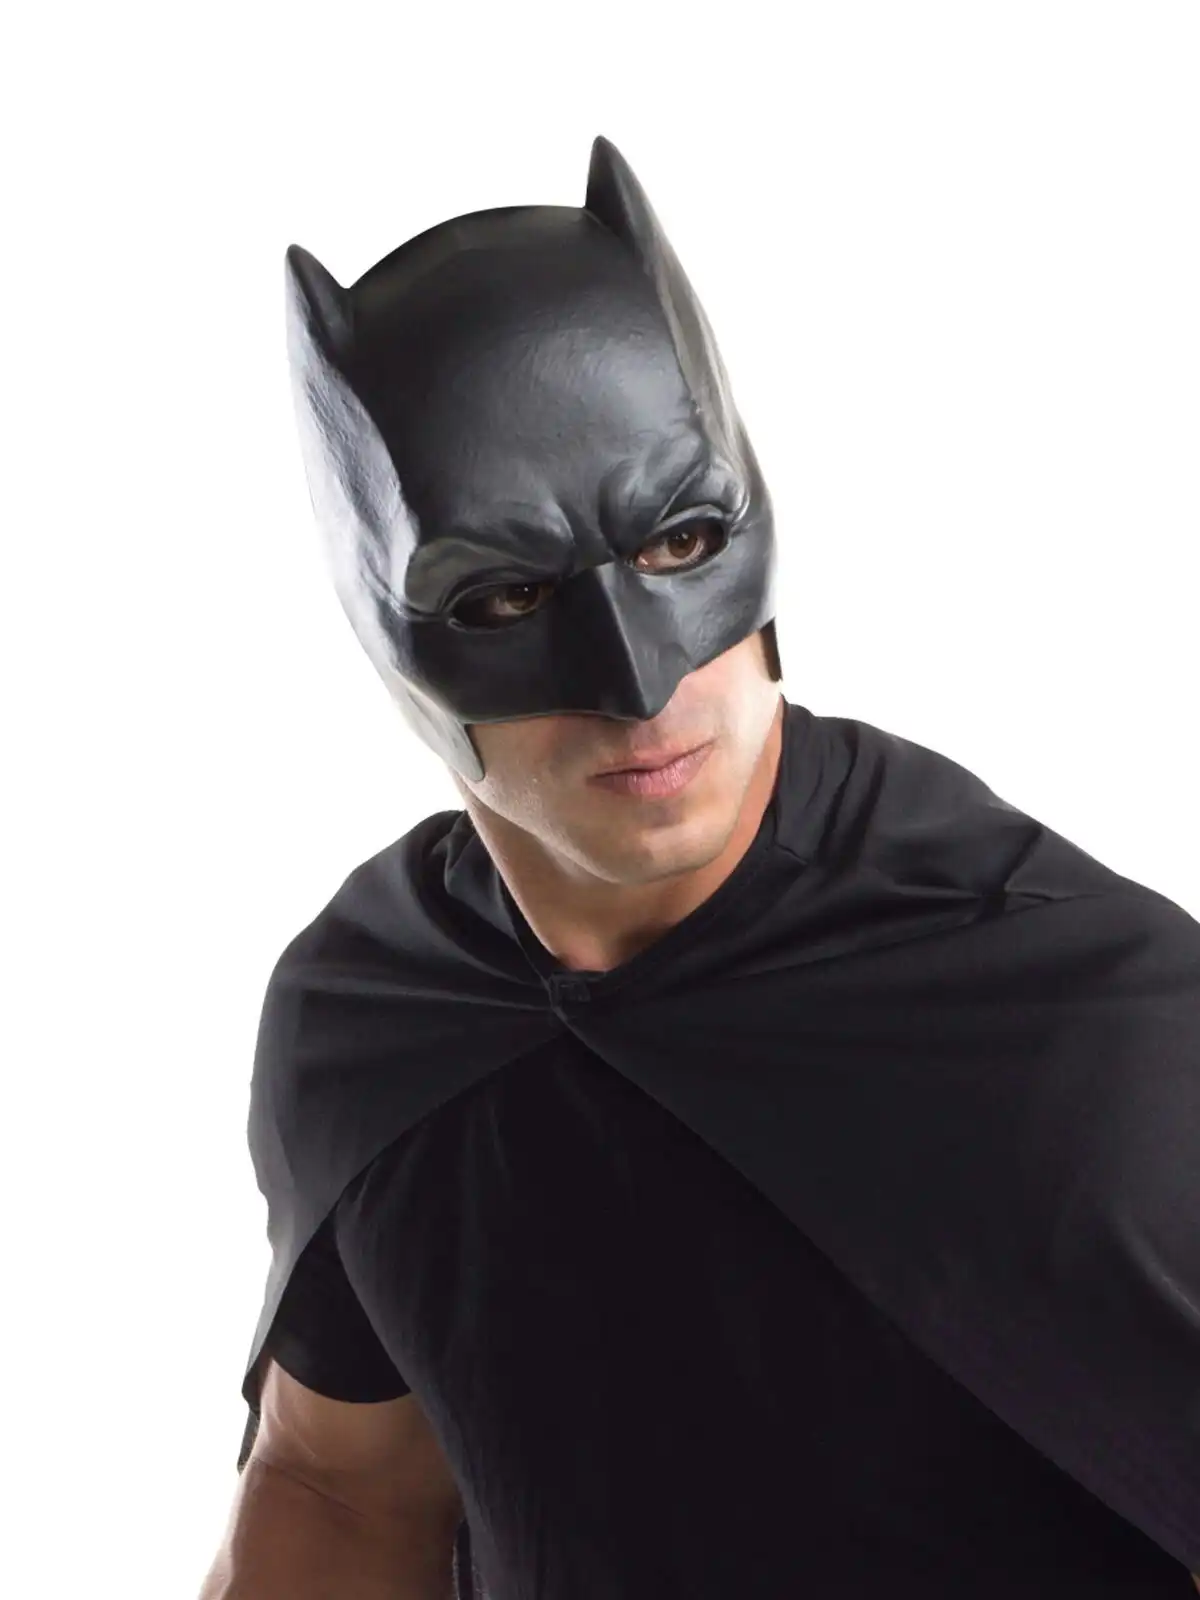 DC Comics Batman Cape And Mask Set Adult Superhero Costume/Halloween Party Black